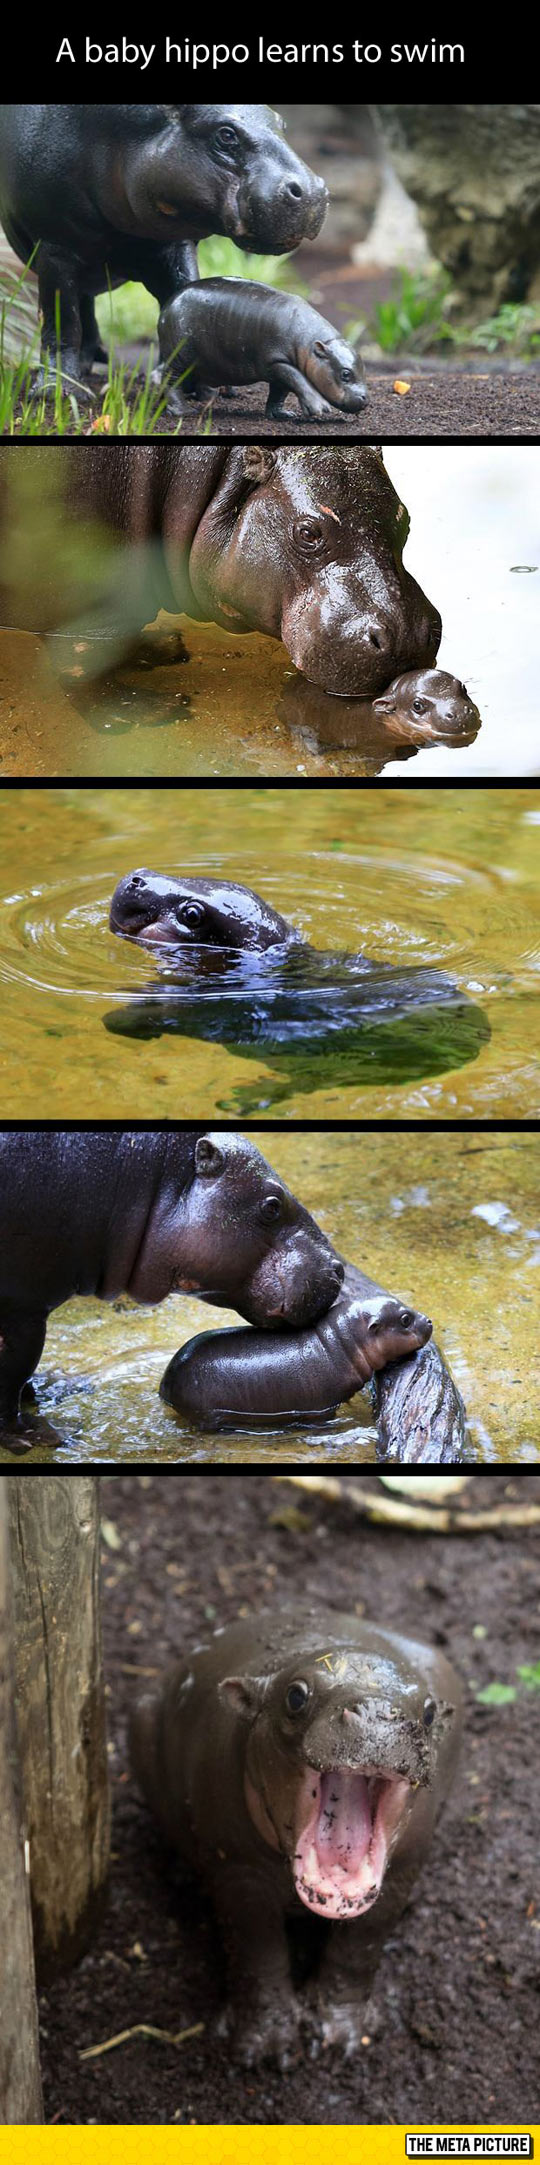 This Baby Hippo Makes Me Happy